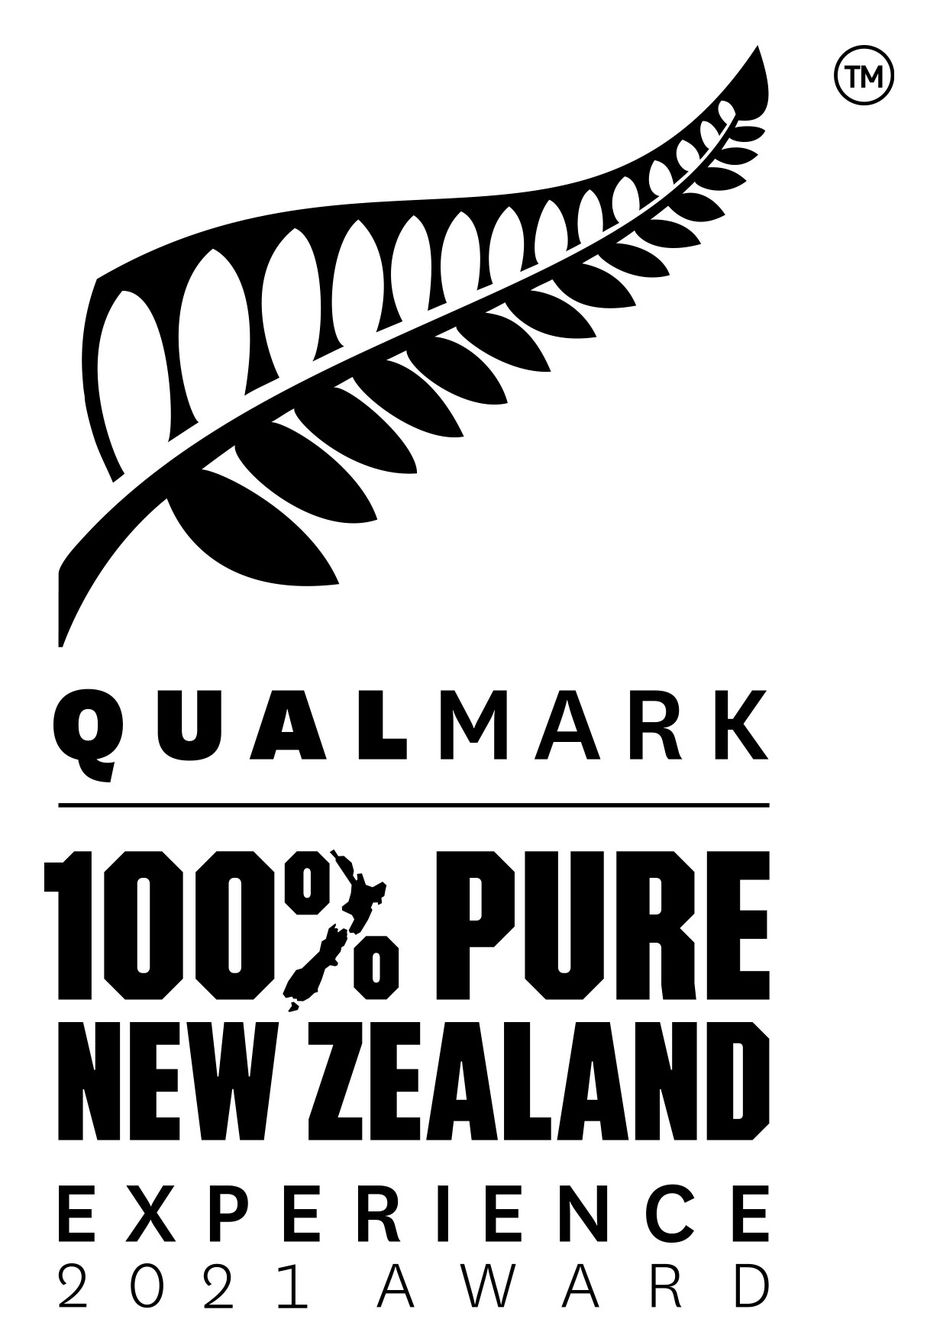 Qualmark 100% Pure New Zealand Experience 2021 Award